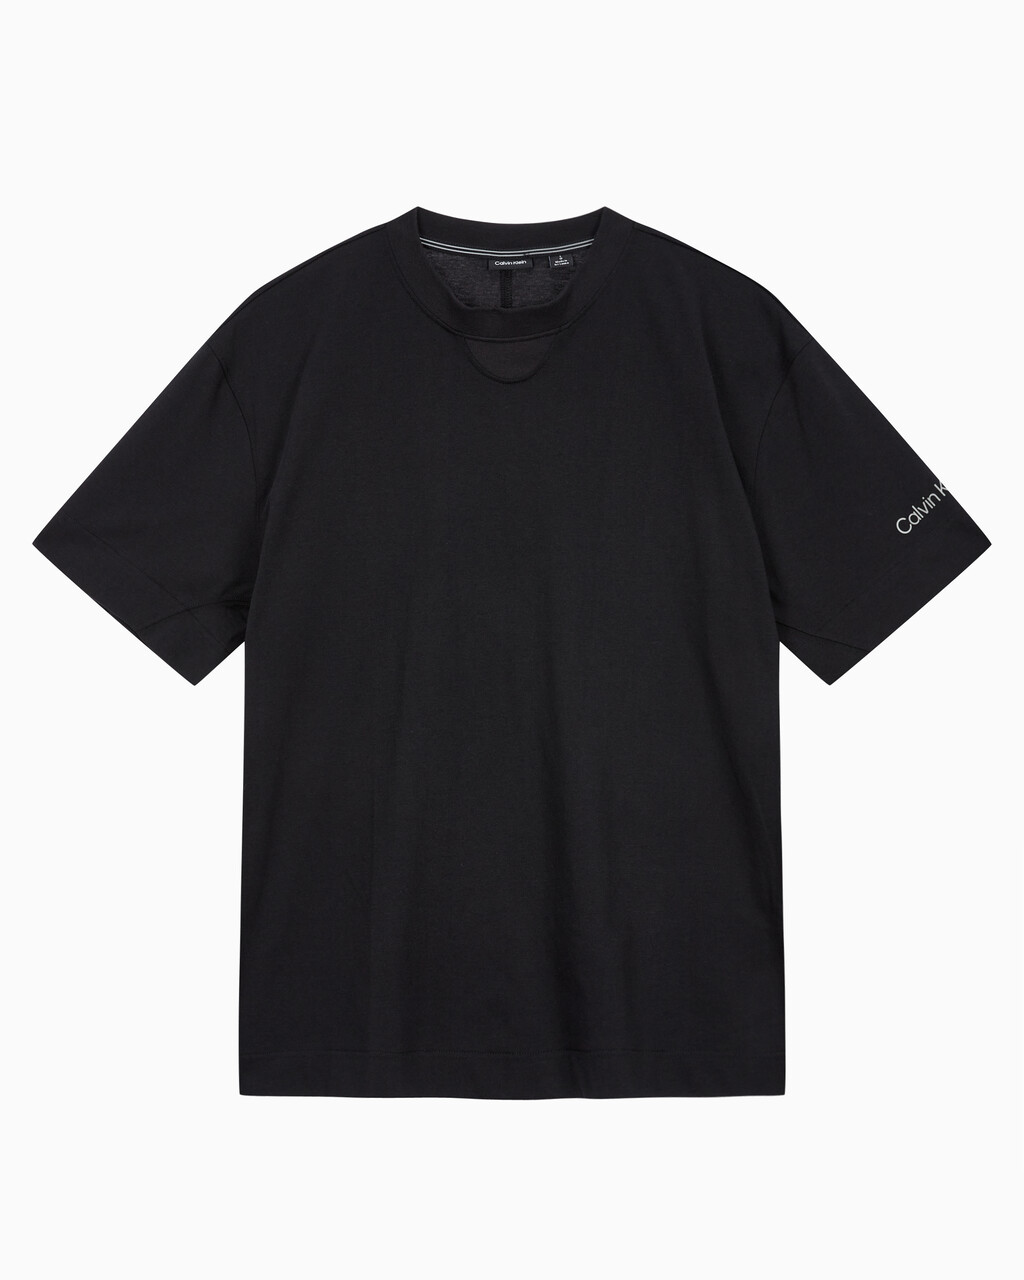 Buy 남성 릴랙스핏 에슬레틱 숏슬리브 티셔츠 in color BLACK